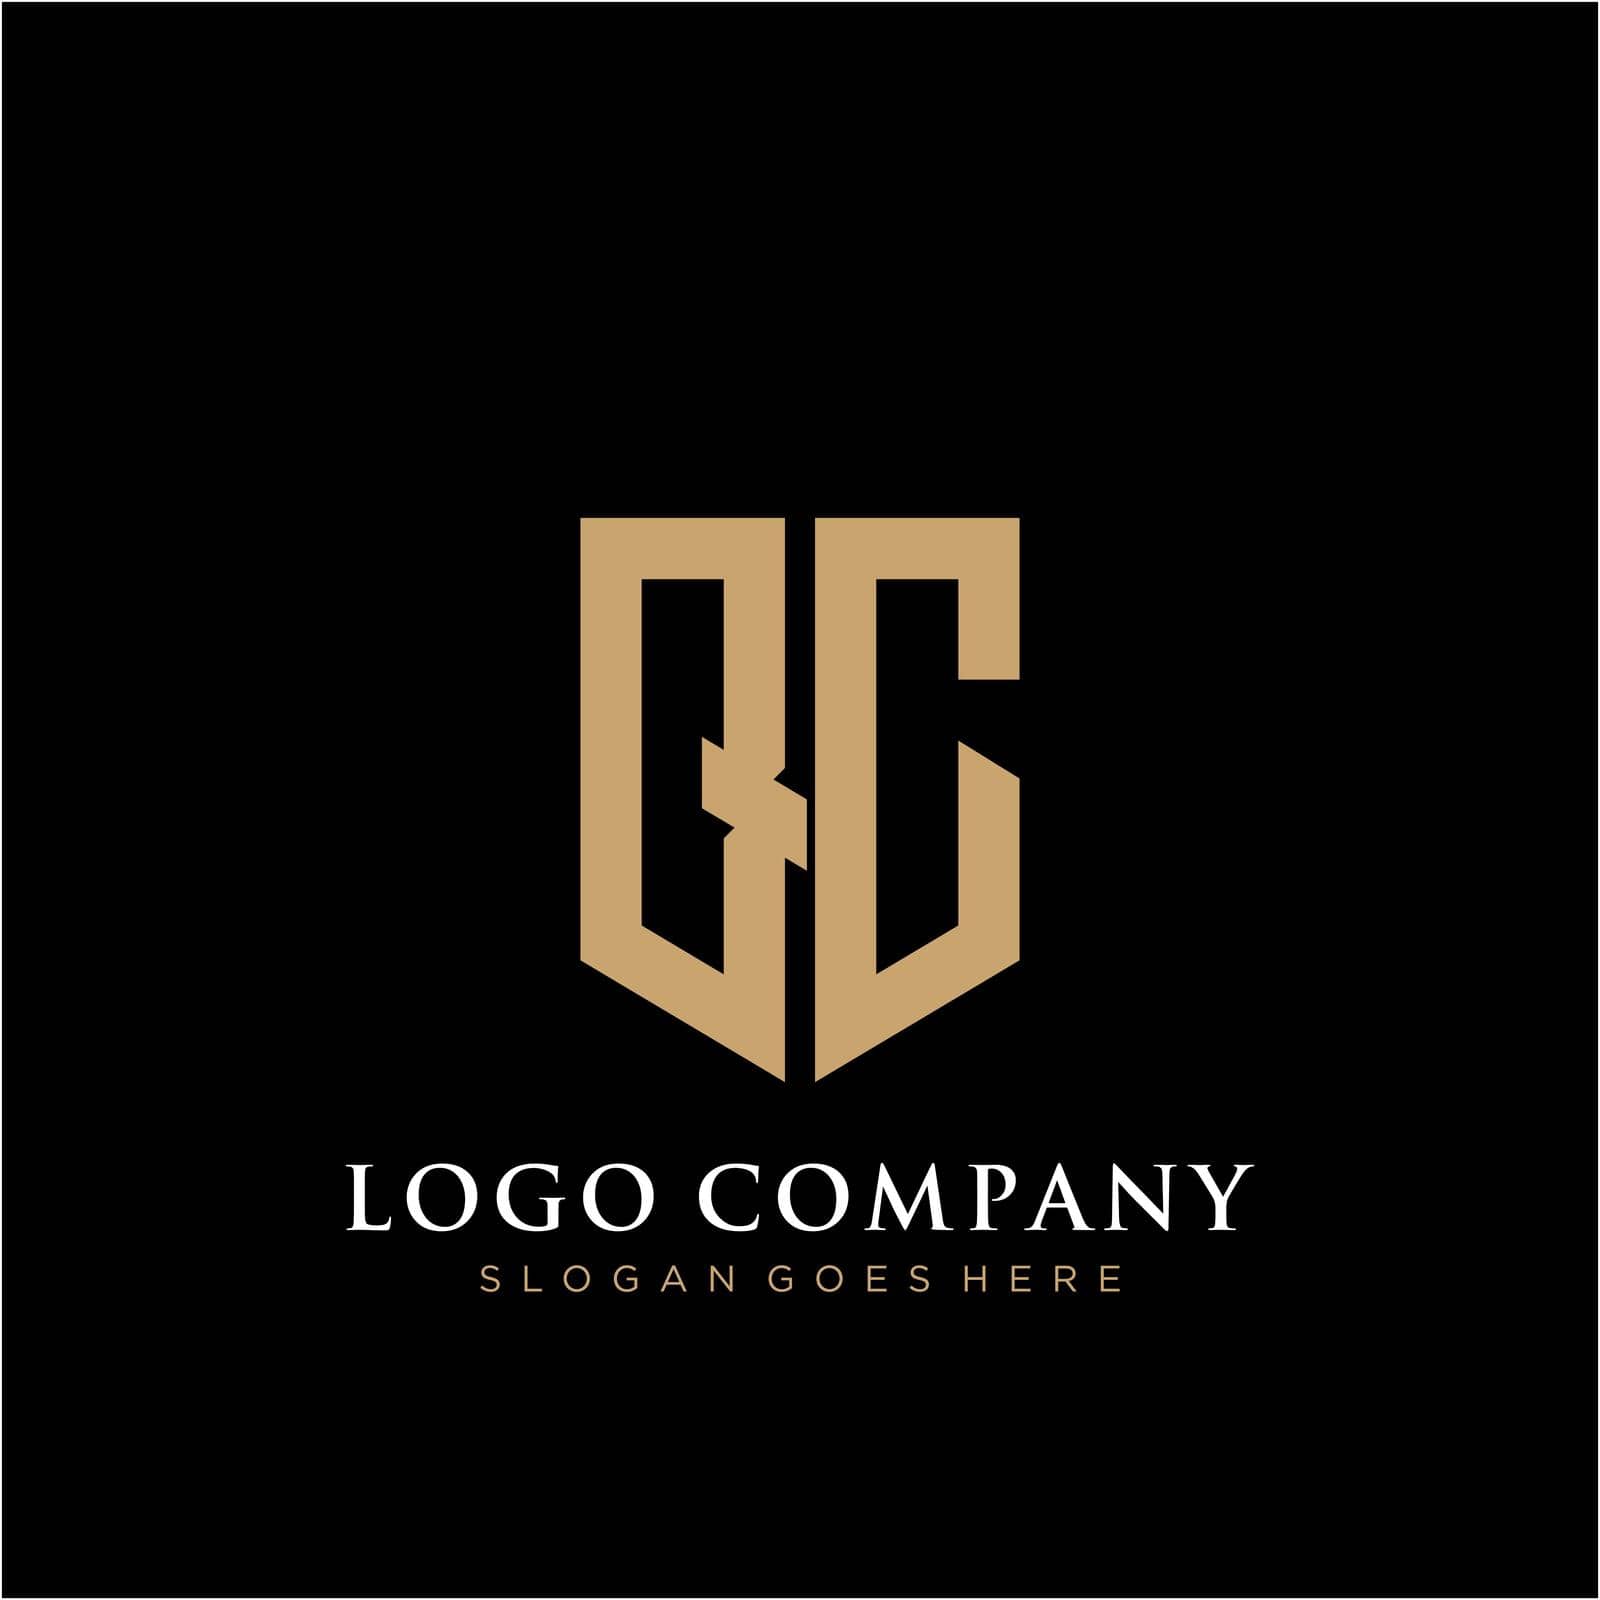 QC Letter logo icon design template elements by liaanniesatul